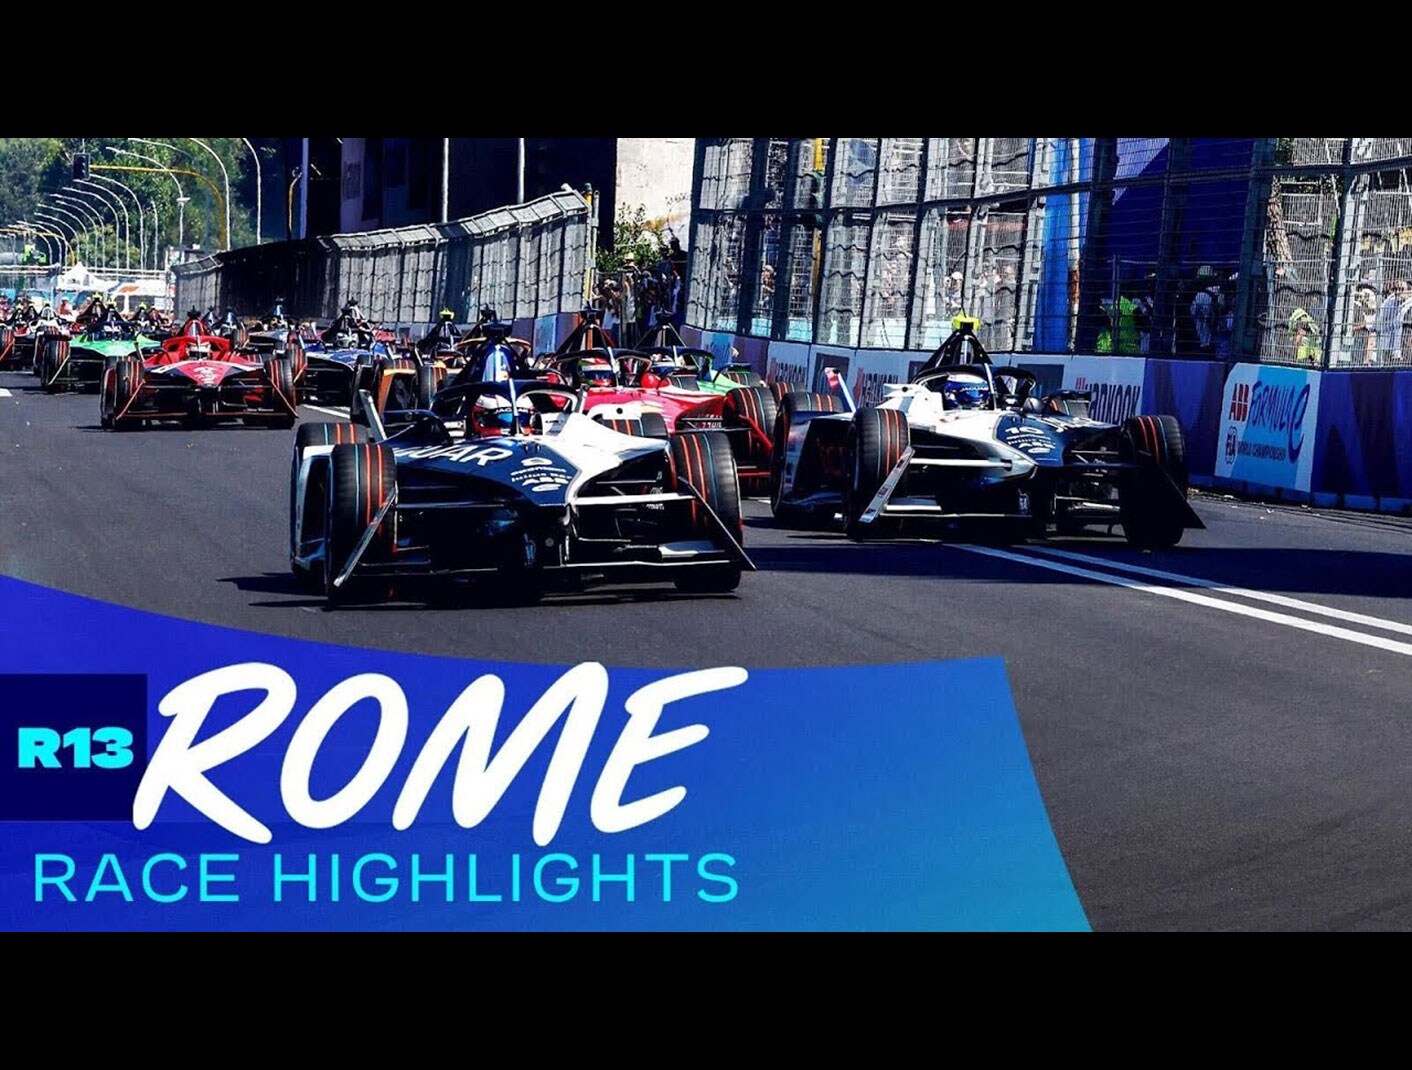 A MASSIVE Shunt & Defensive Driving | 2023 Hankook Rome E-Prix - Race Highlights